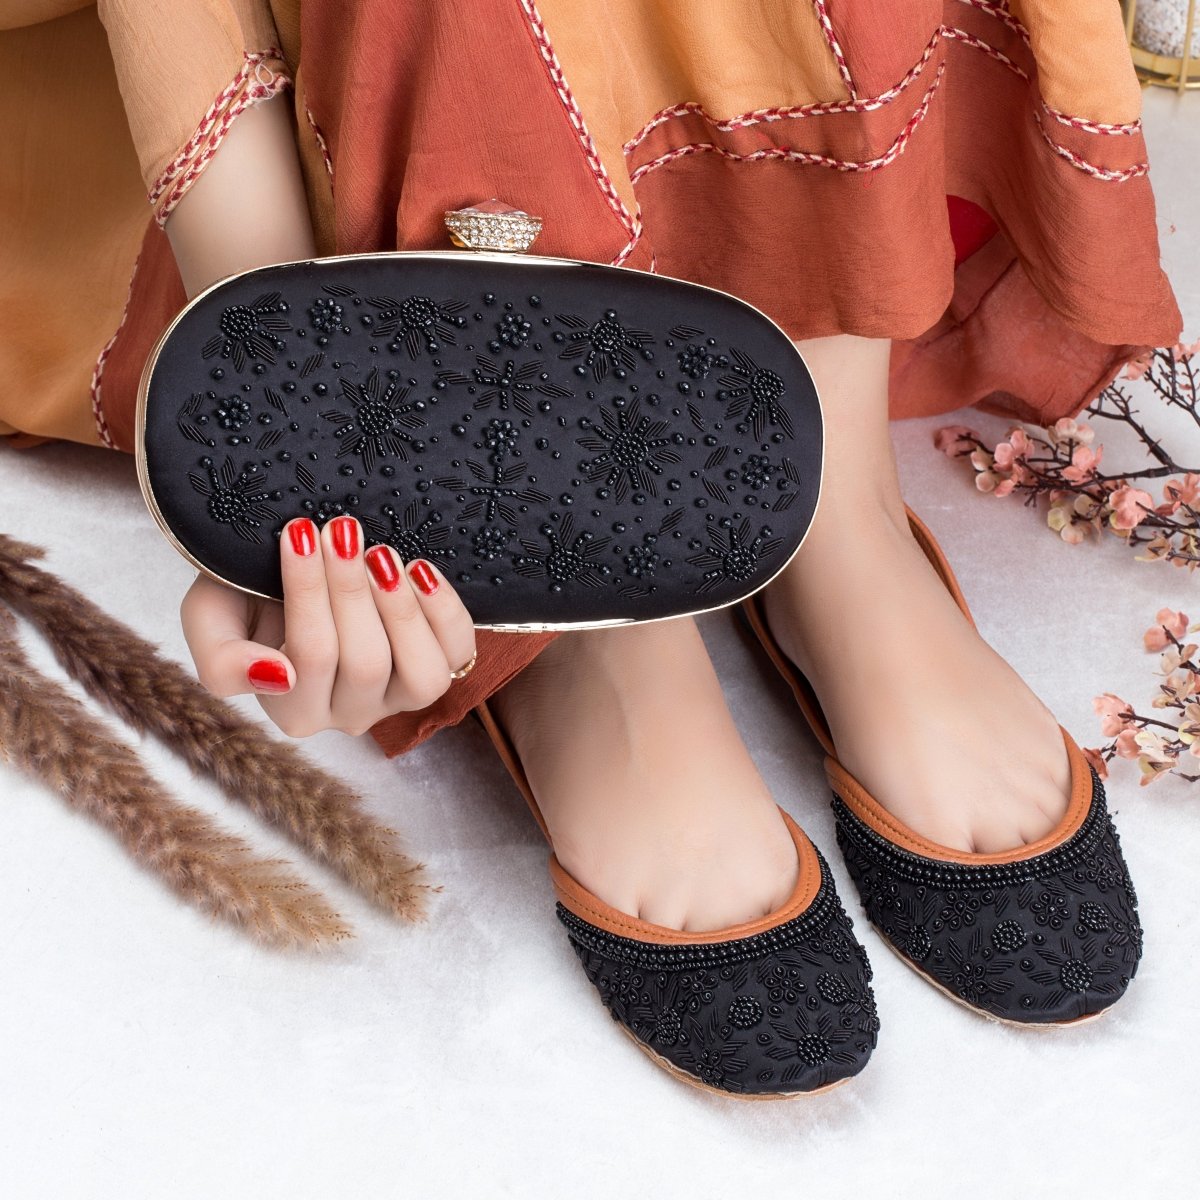 Men's Pure Leather Brown Jutti Slippers Mojari Khussa Shoes Handmade  Rajasthani. | eBay